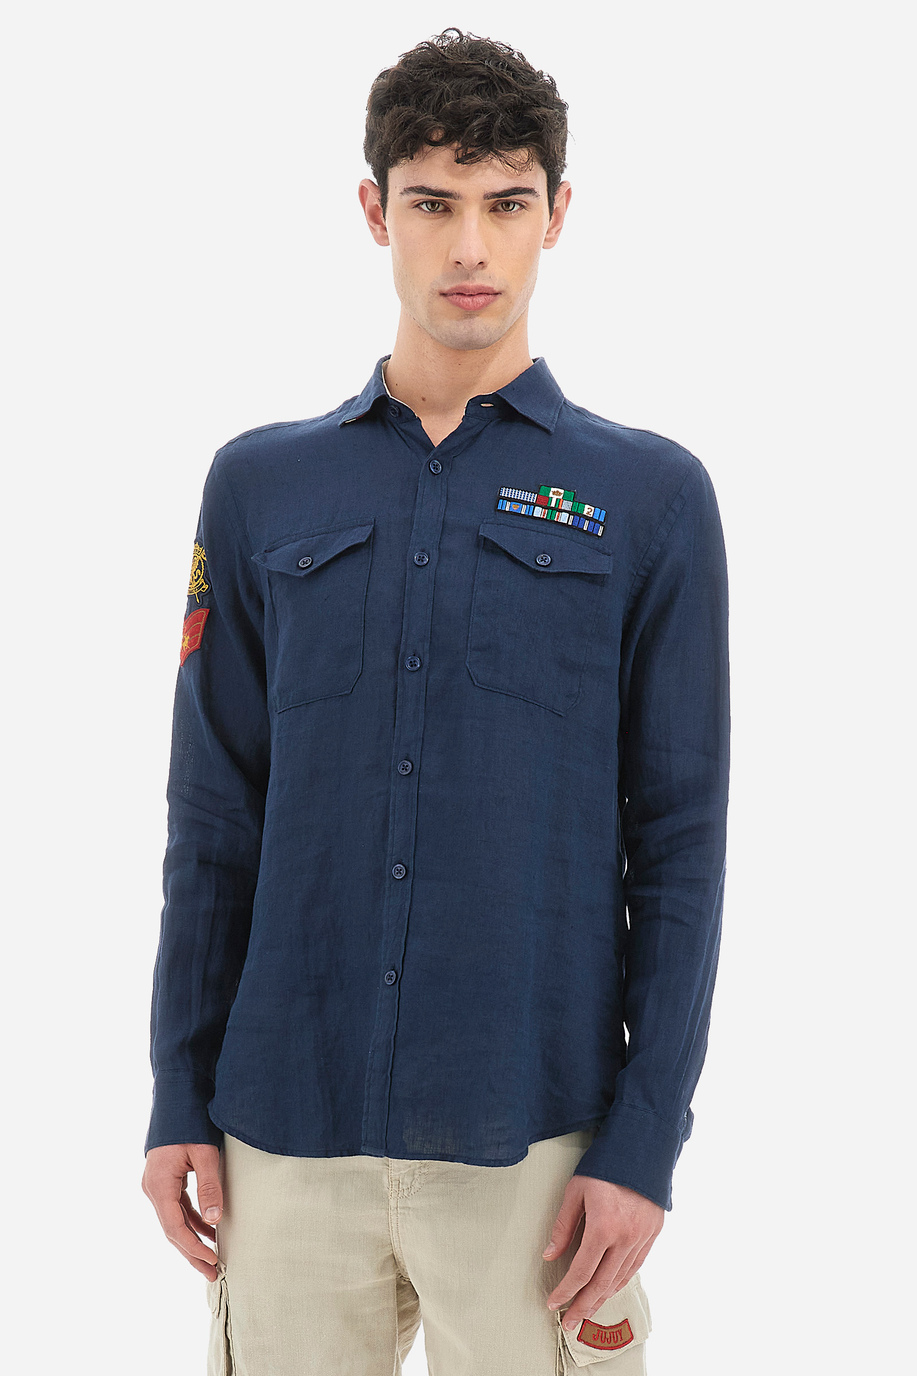 Langärmliges Herrenhemd aus 100 % Leinen in normaler Passform - Viviano - Hemden | La Martina - Official Online Shop